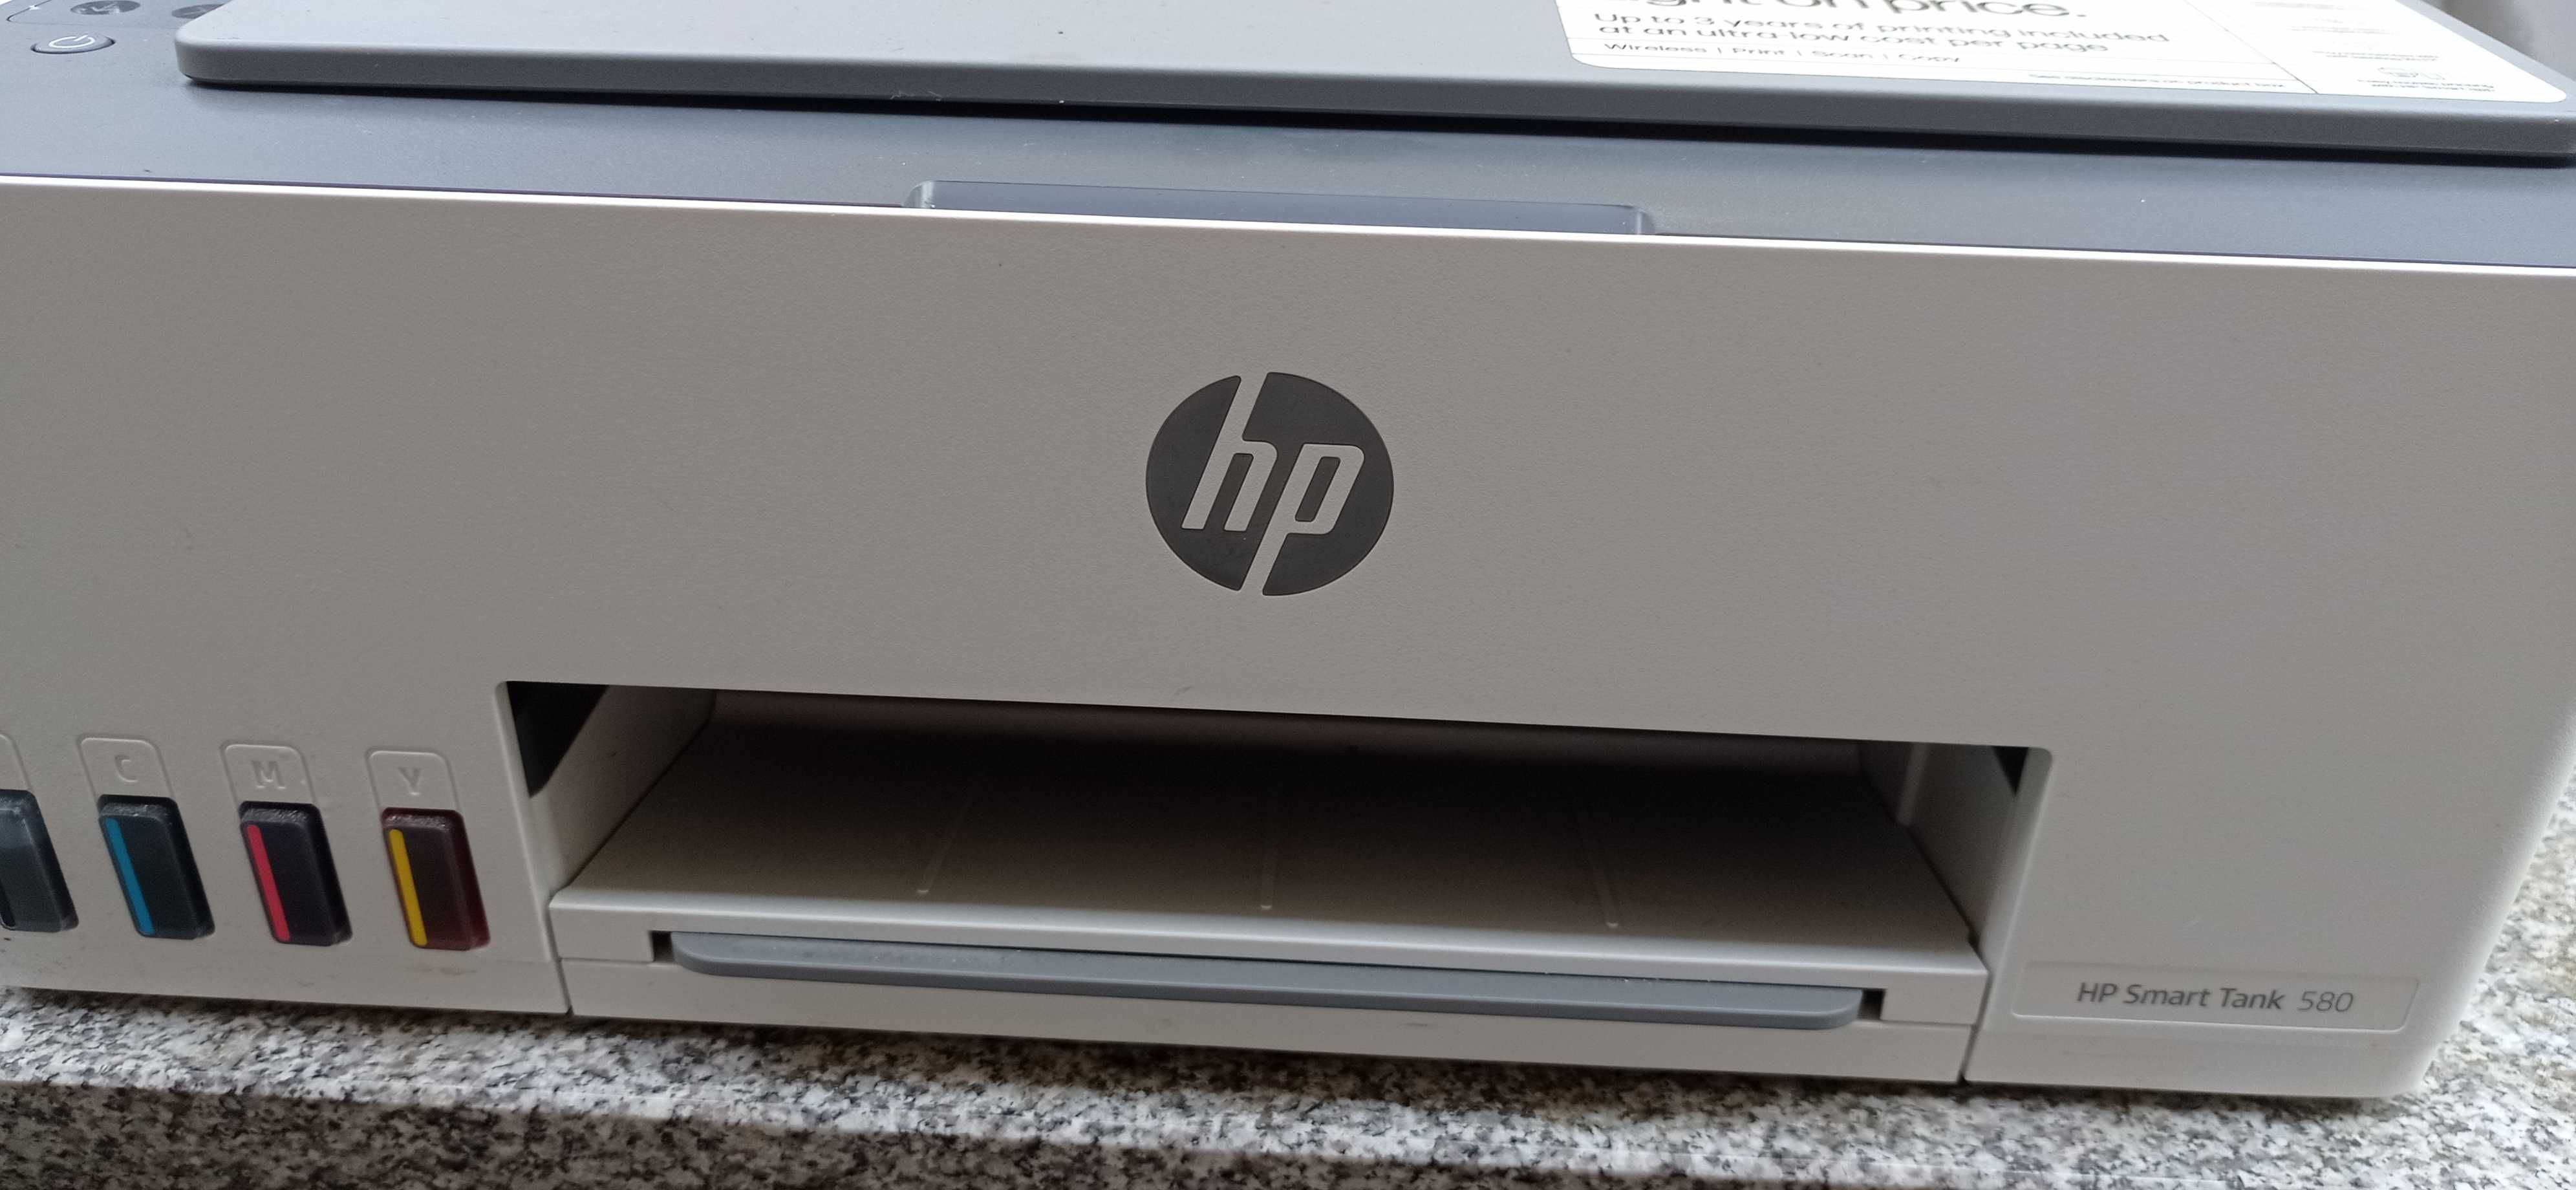 Drukarka kolorowa marki HP Thank 580 Series stan idealny